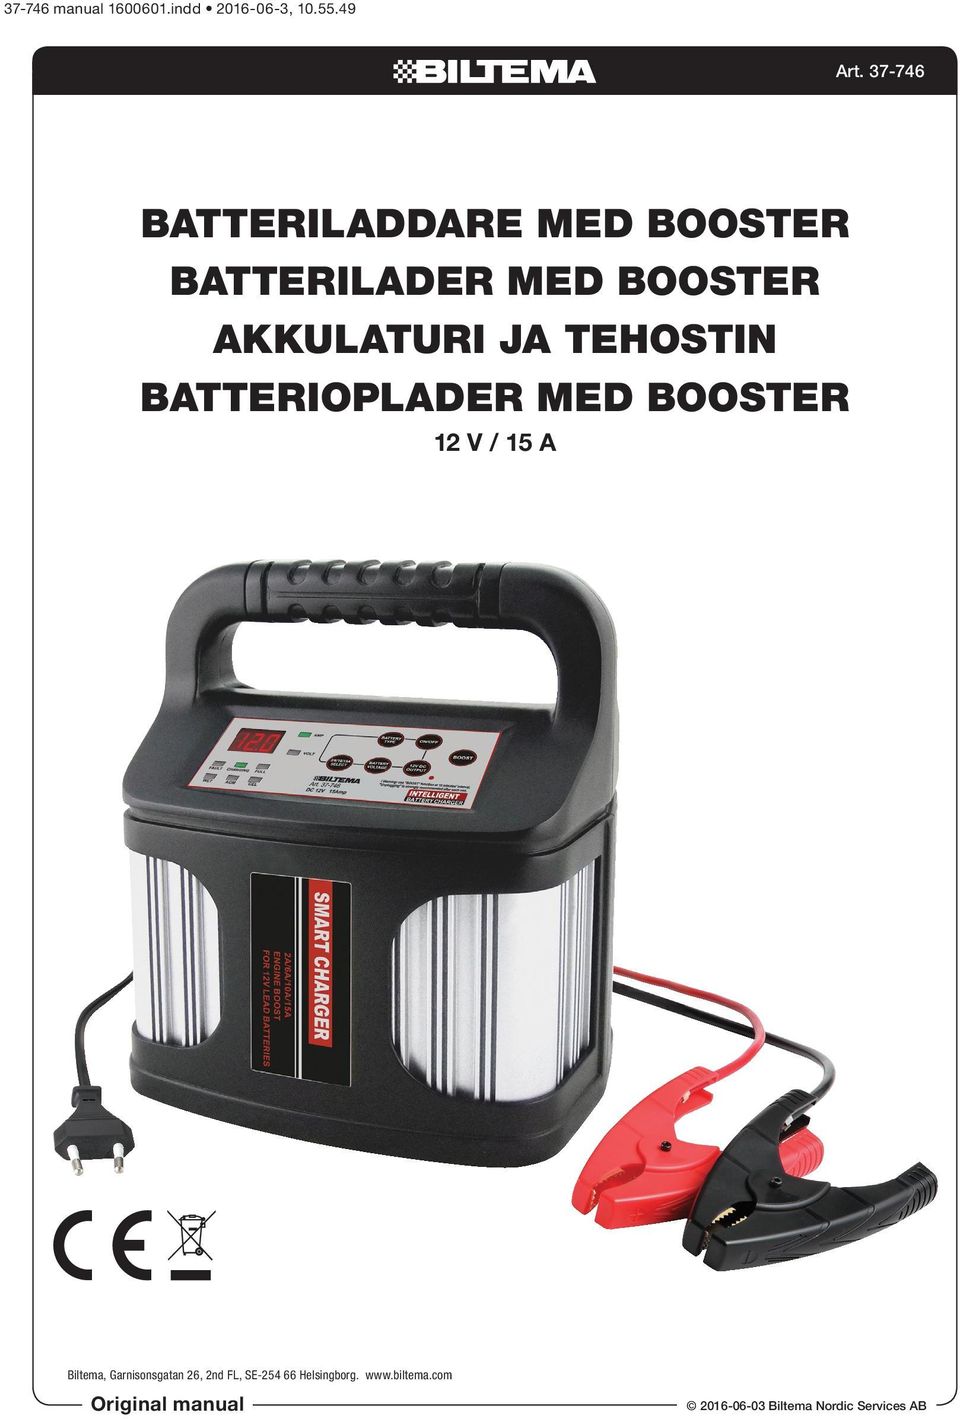 Batteriladdare med booster. Batterioplader med booster. Akkulaturi ja  tehostin - PDF Gratis nedlasting